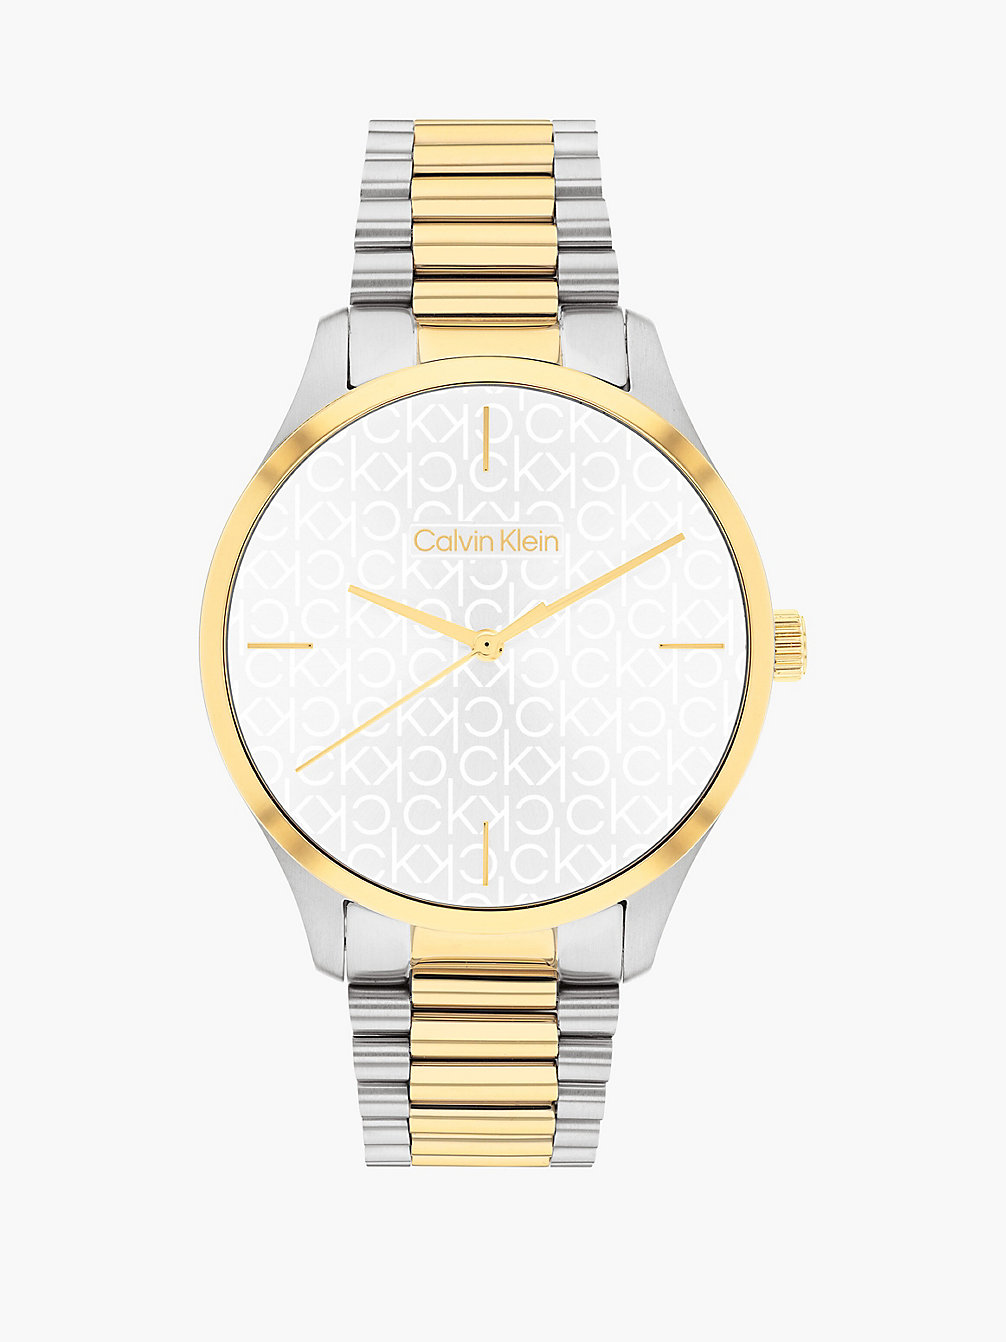 Reloj - Iconic > TWO TONE > undefined unisex > Calvin Klein